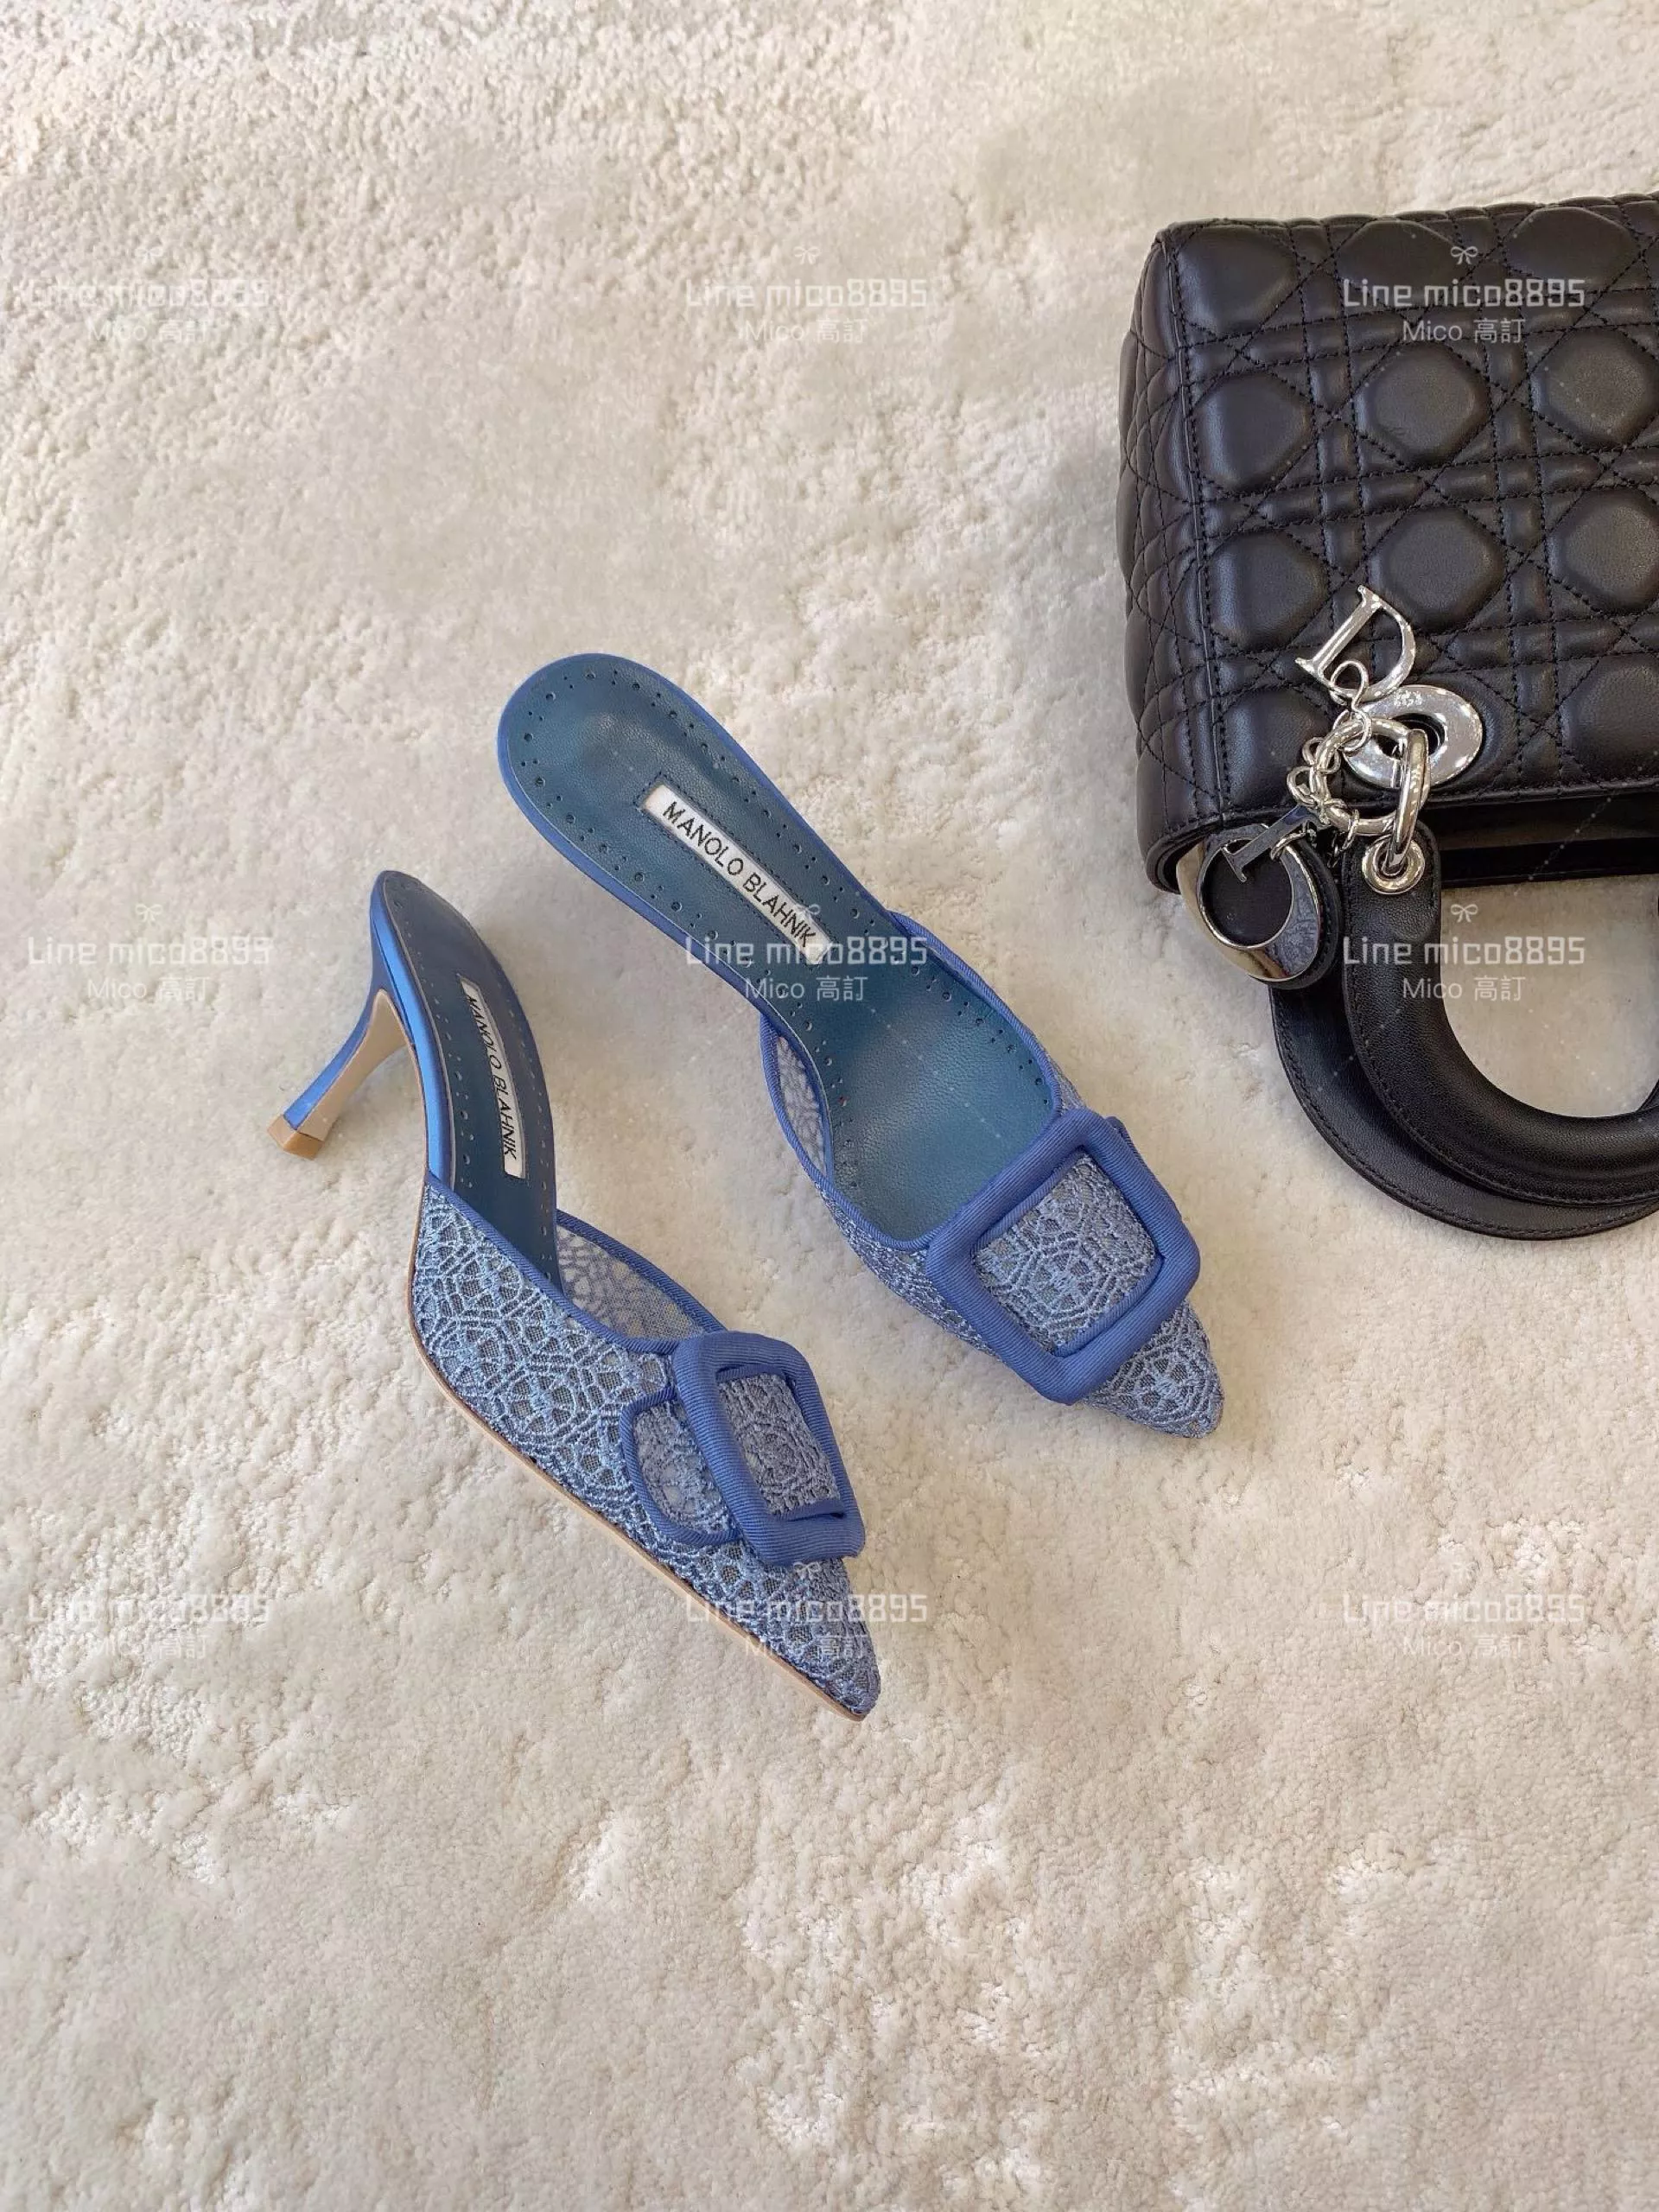 Manolo Blahnik 經典Maysale 系列 蕾絲面 牛仔藍 高跟涼鞋 拖鞋 跟鞋 跟高6.5cm 34-42